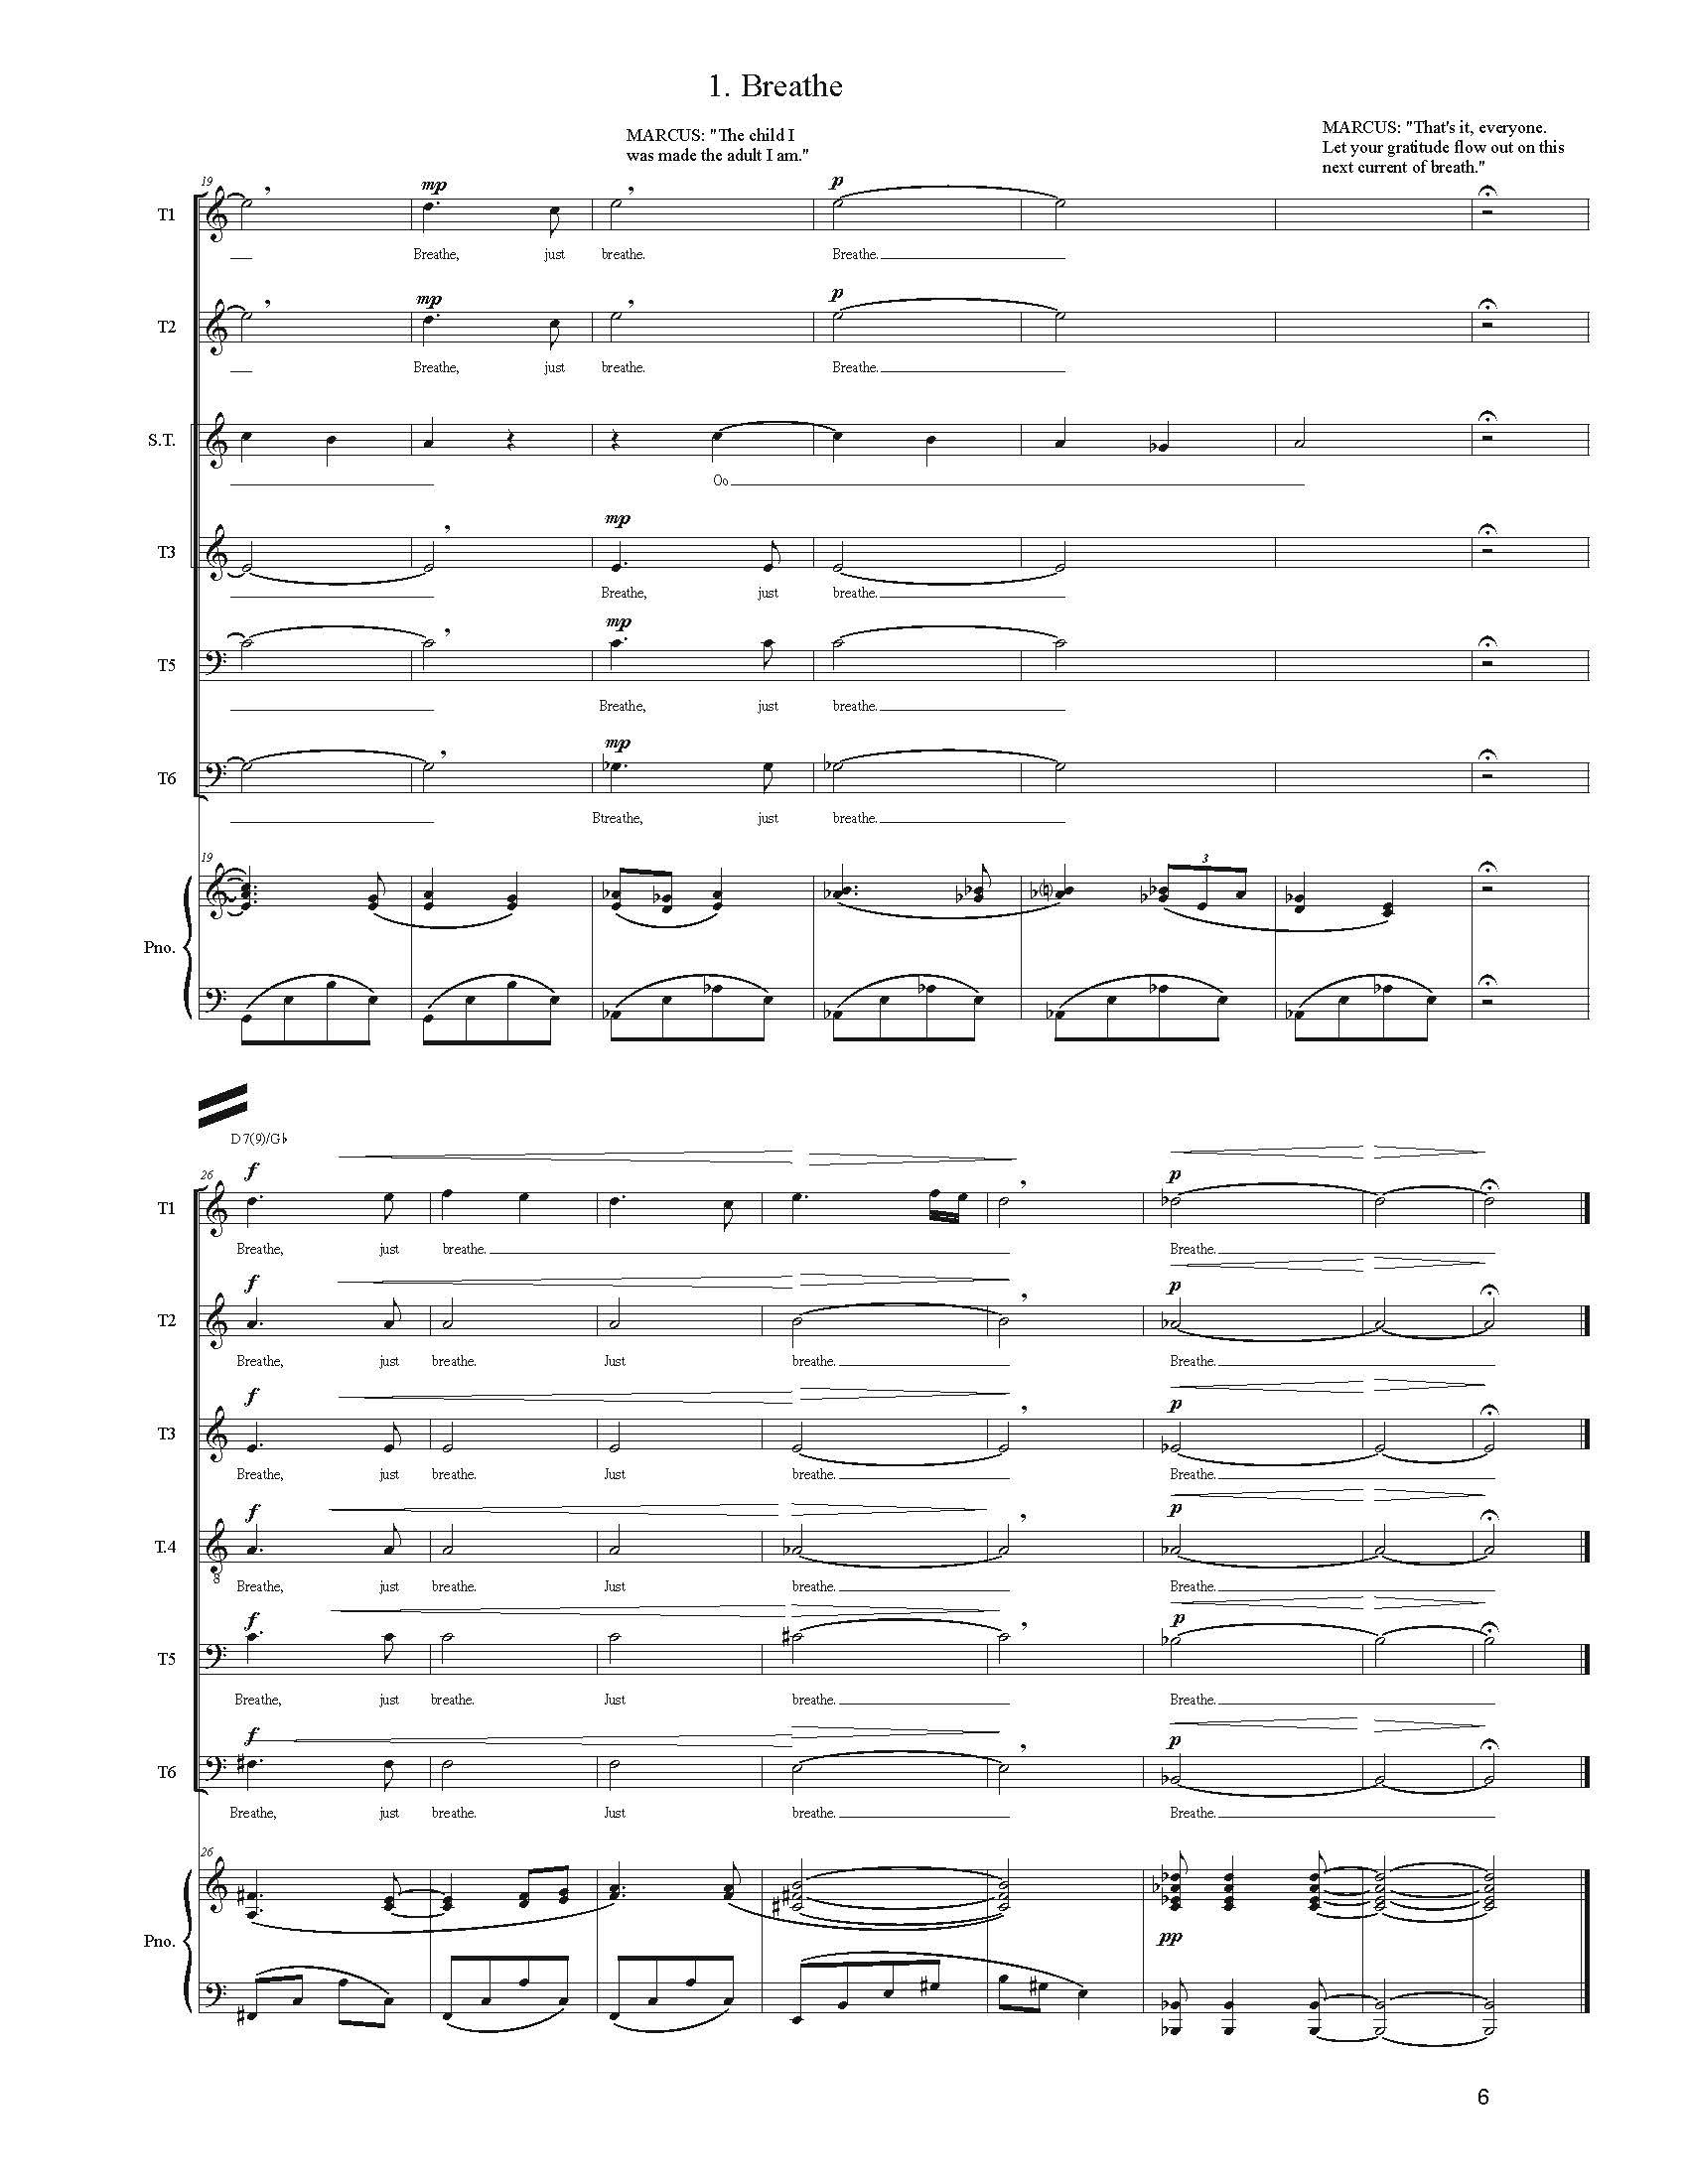 FULL PIANO VOCAL SCORE DRAFT 1 - Score_Page_006.jpg